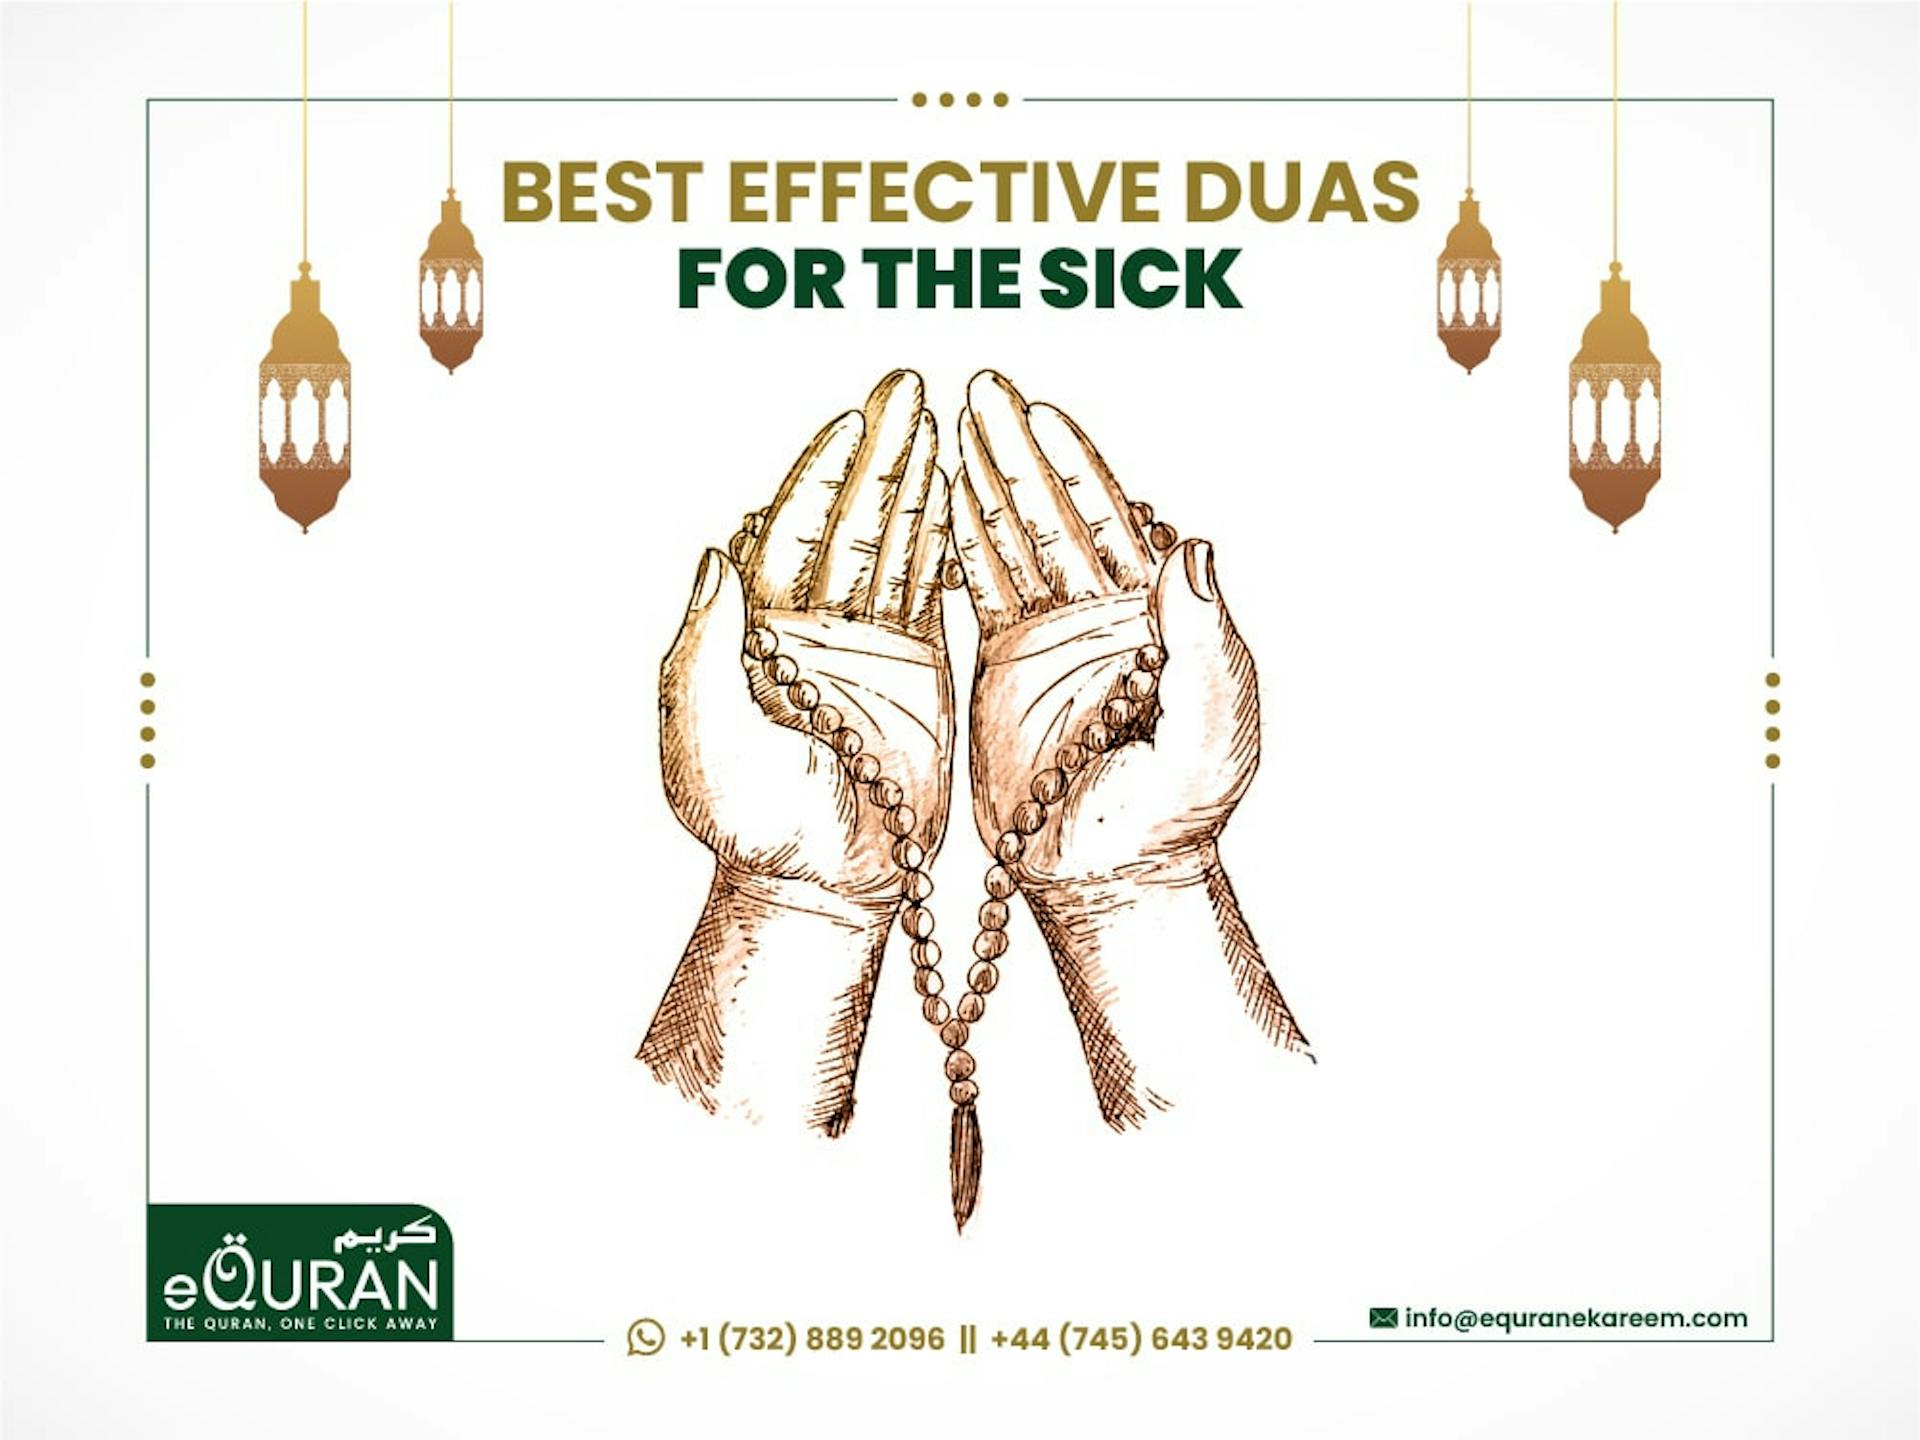 Best Effective Duas for the Sick by eQuranekrareem